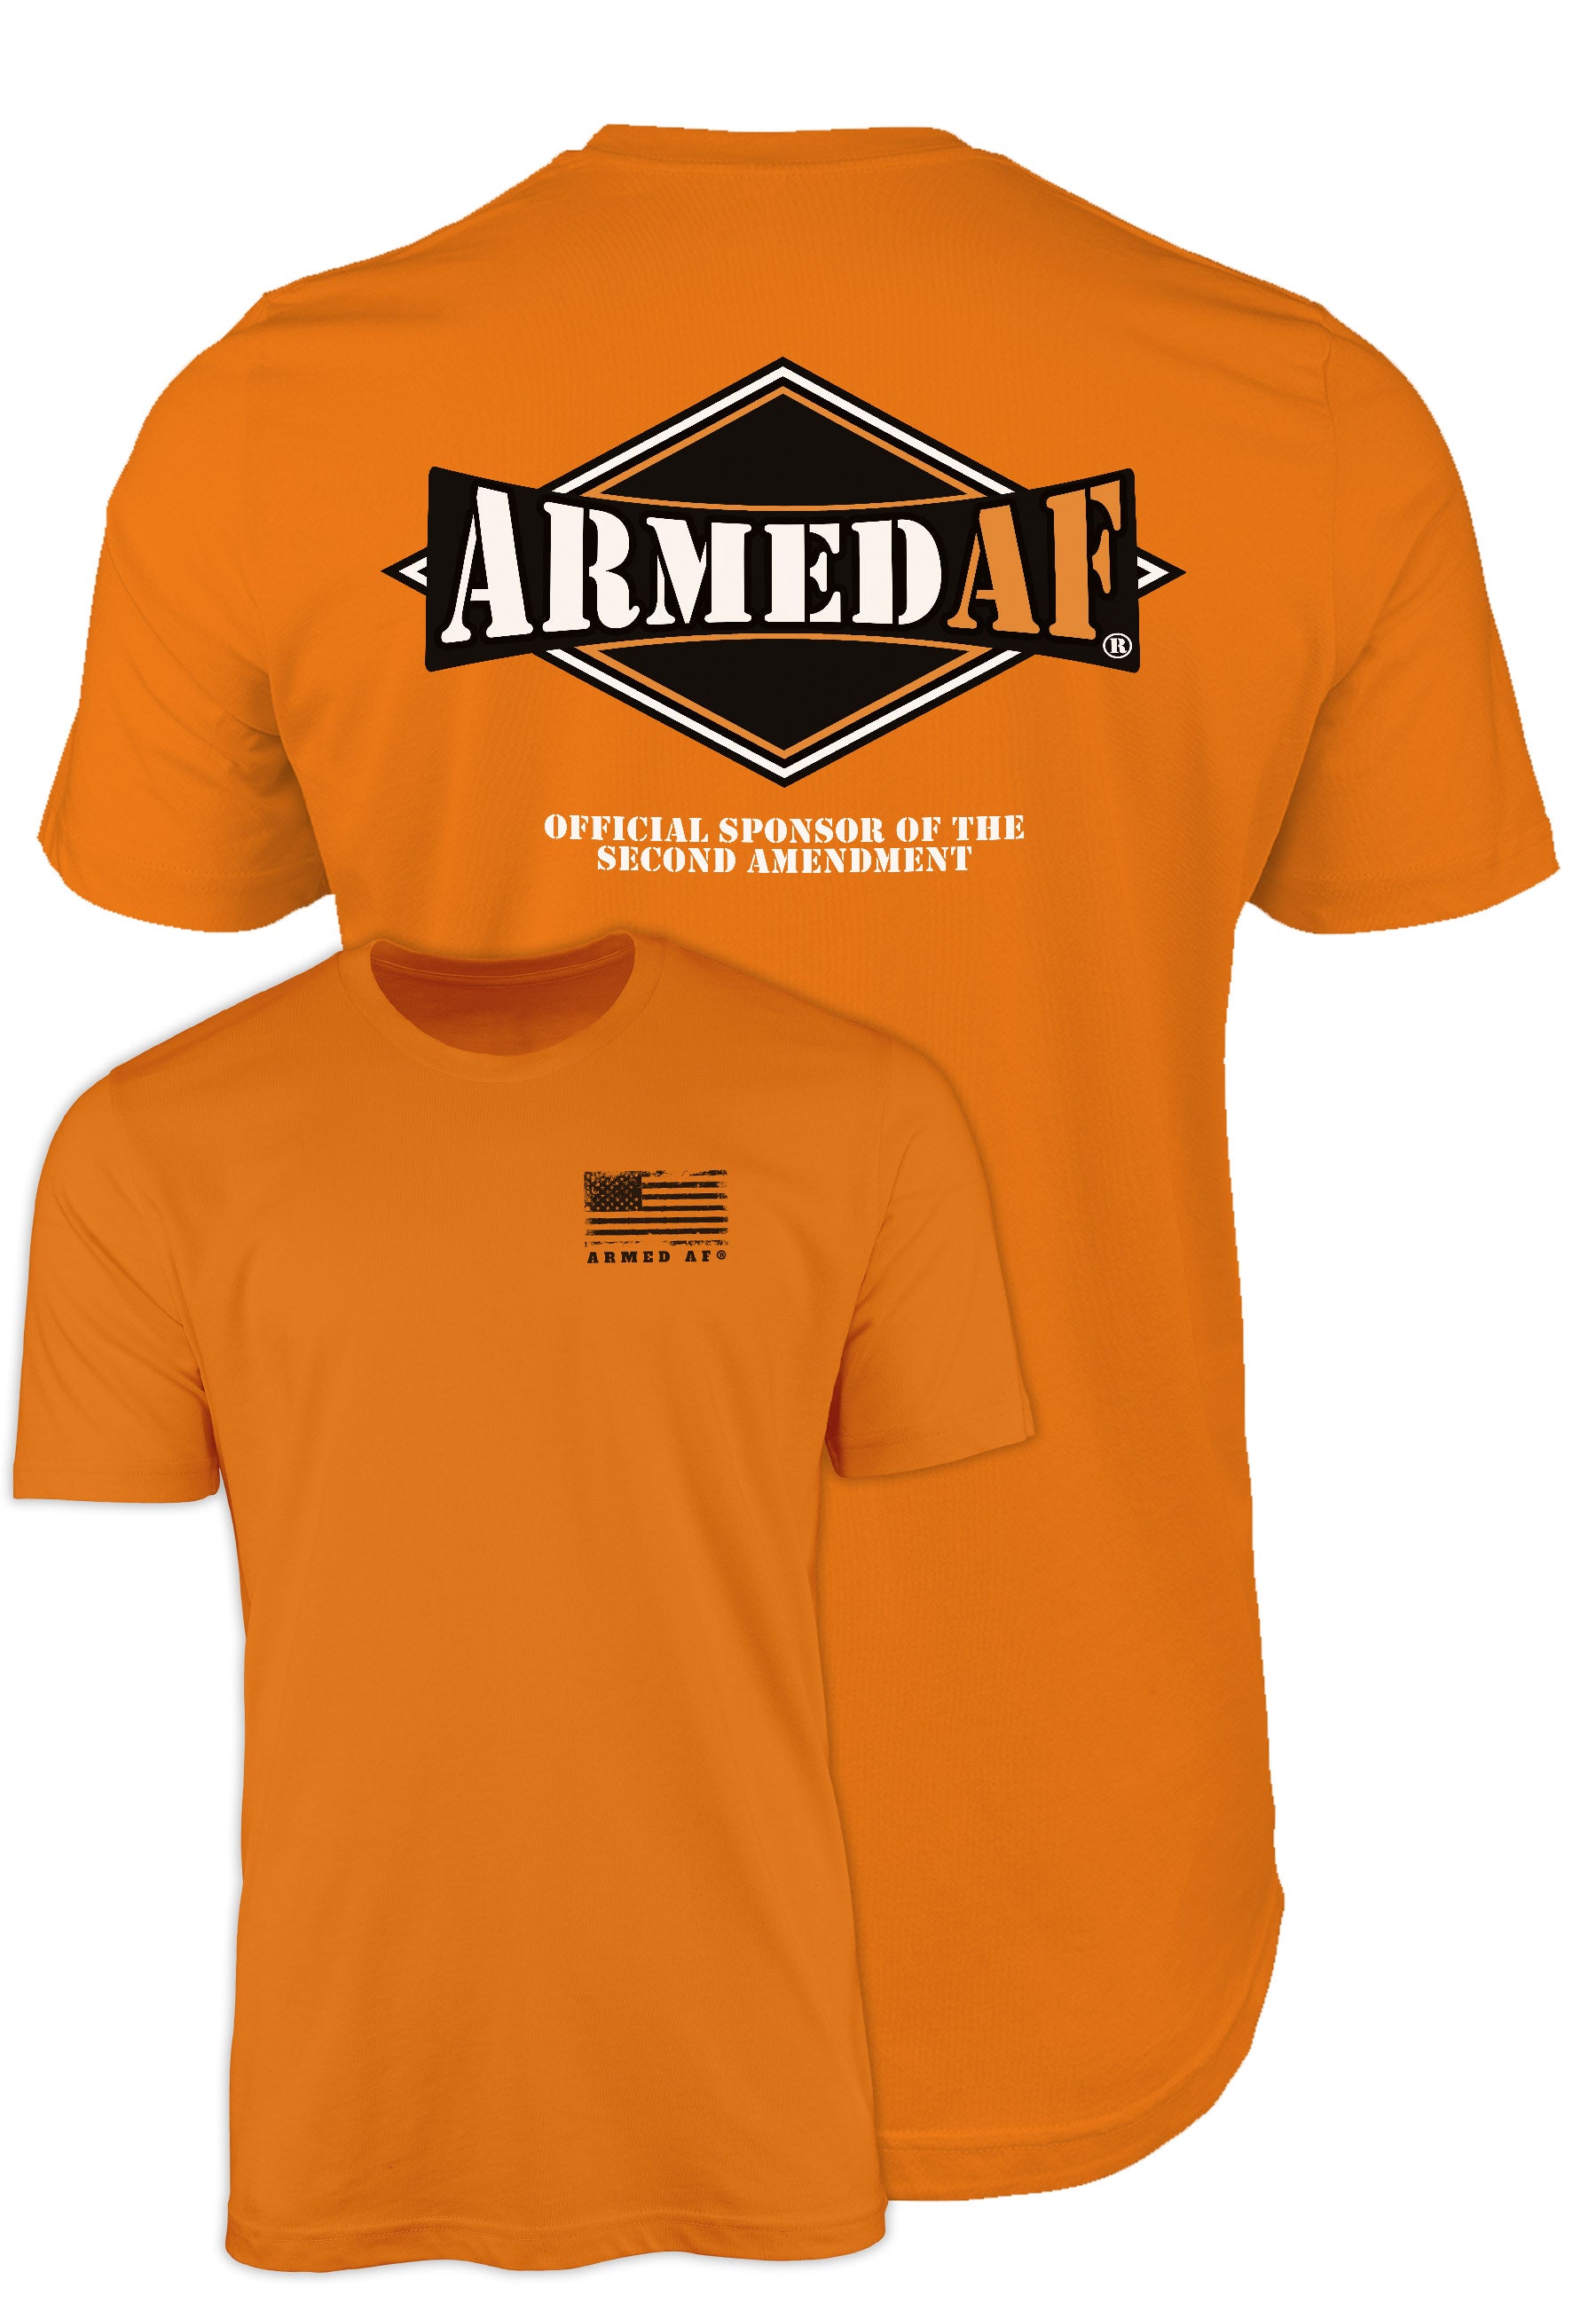 Biker look logo shirt from ArmedAF brand